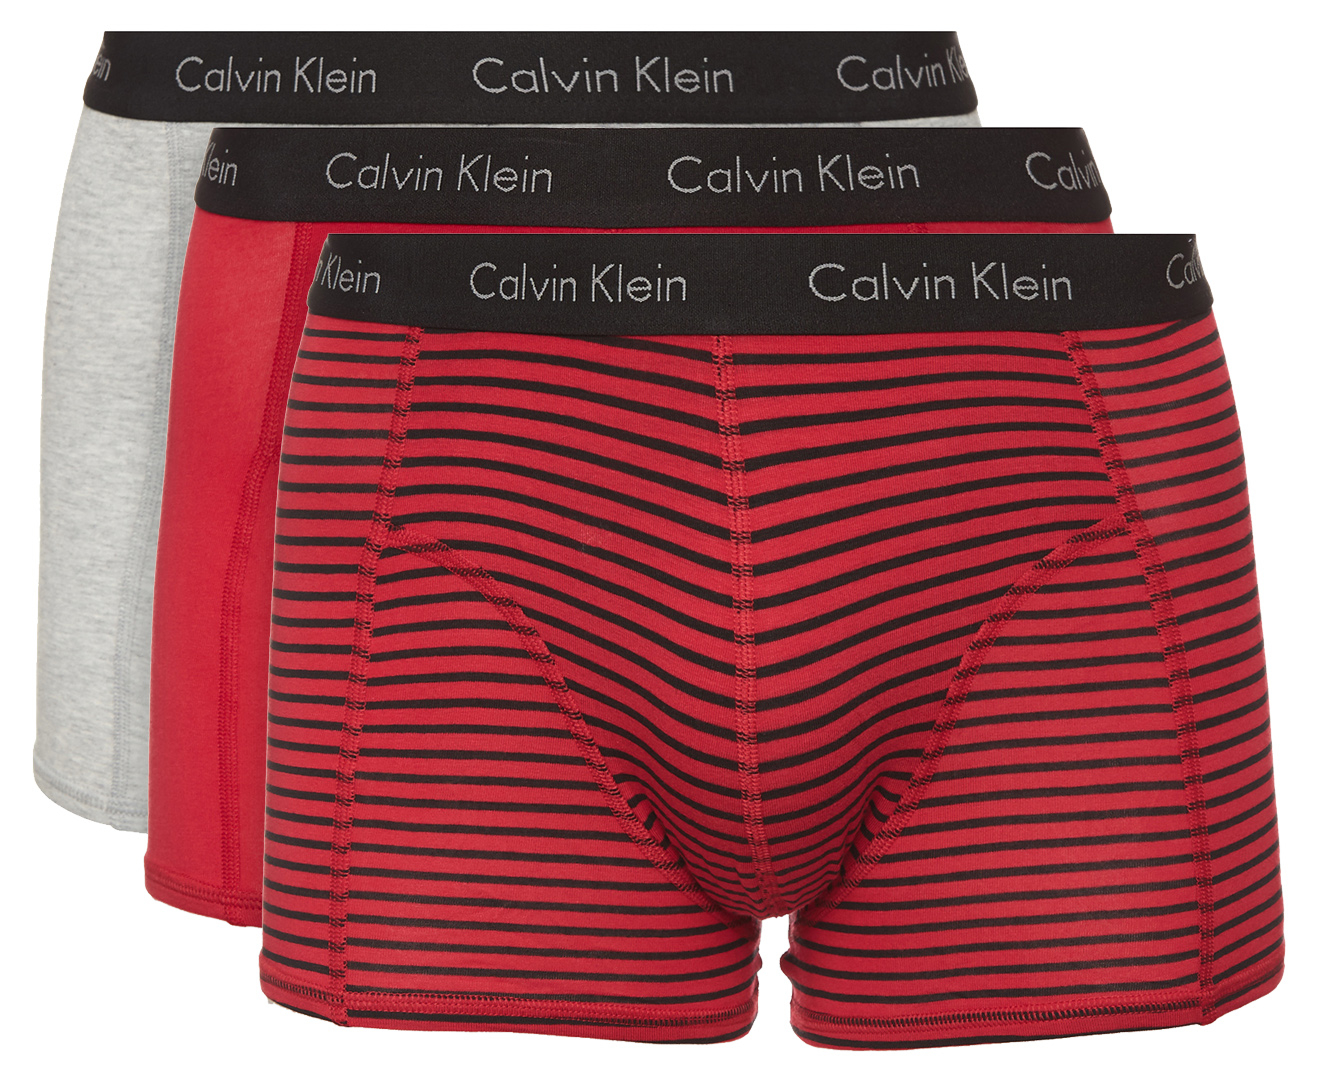 Calvin Klein Men's Elements Trunk 3-Pack - Black/Multi | Catch.co.nz